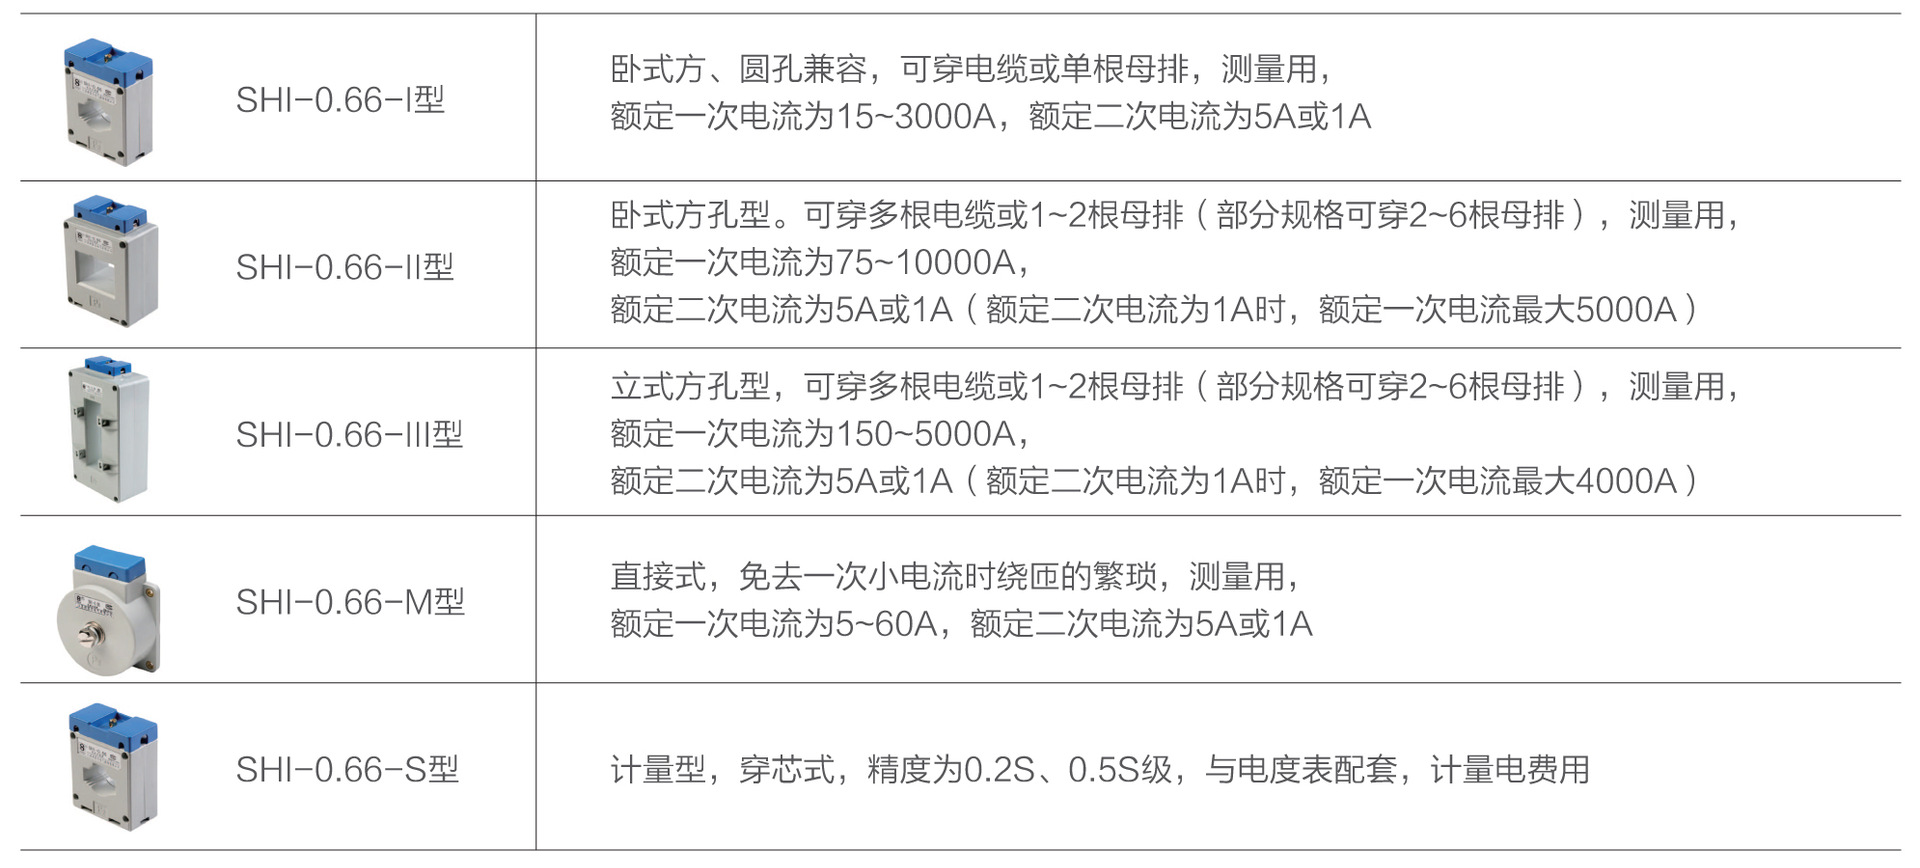 SHI-066-40I精度等级1级电流互感器江苏斯菲尔厂家直销 电流互感器,江苏斯菲尔厂家直销,SHI-066